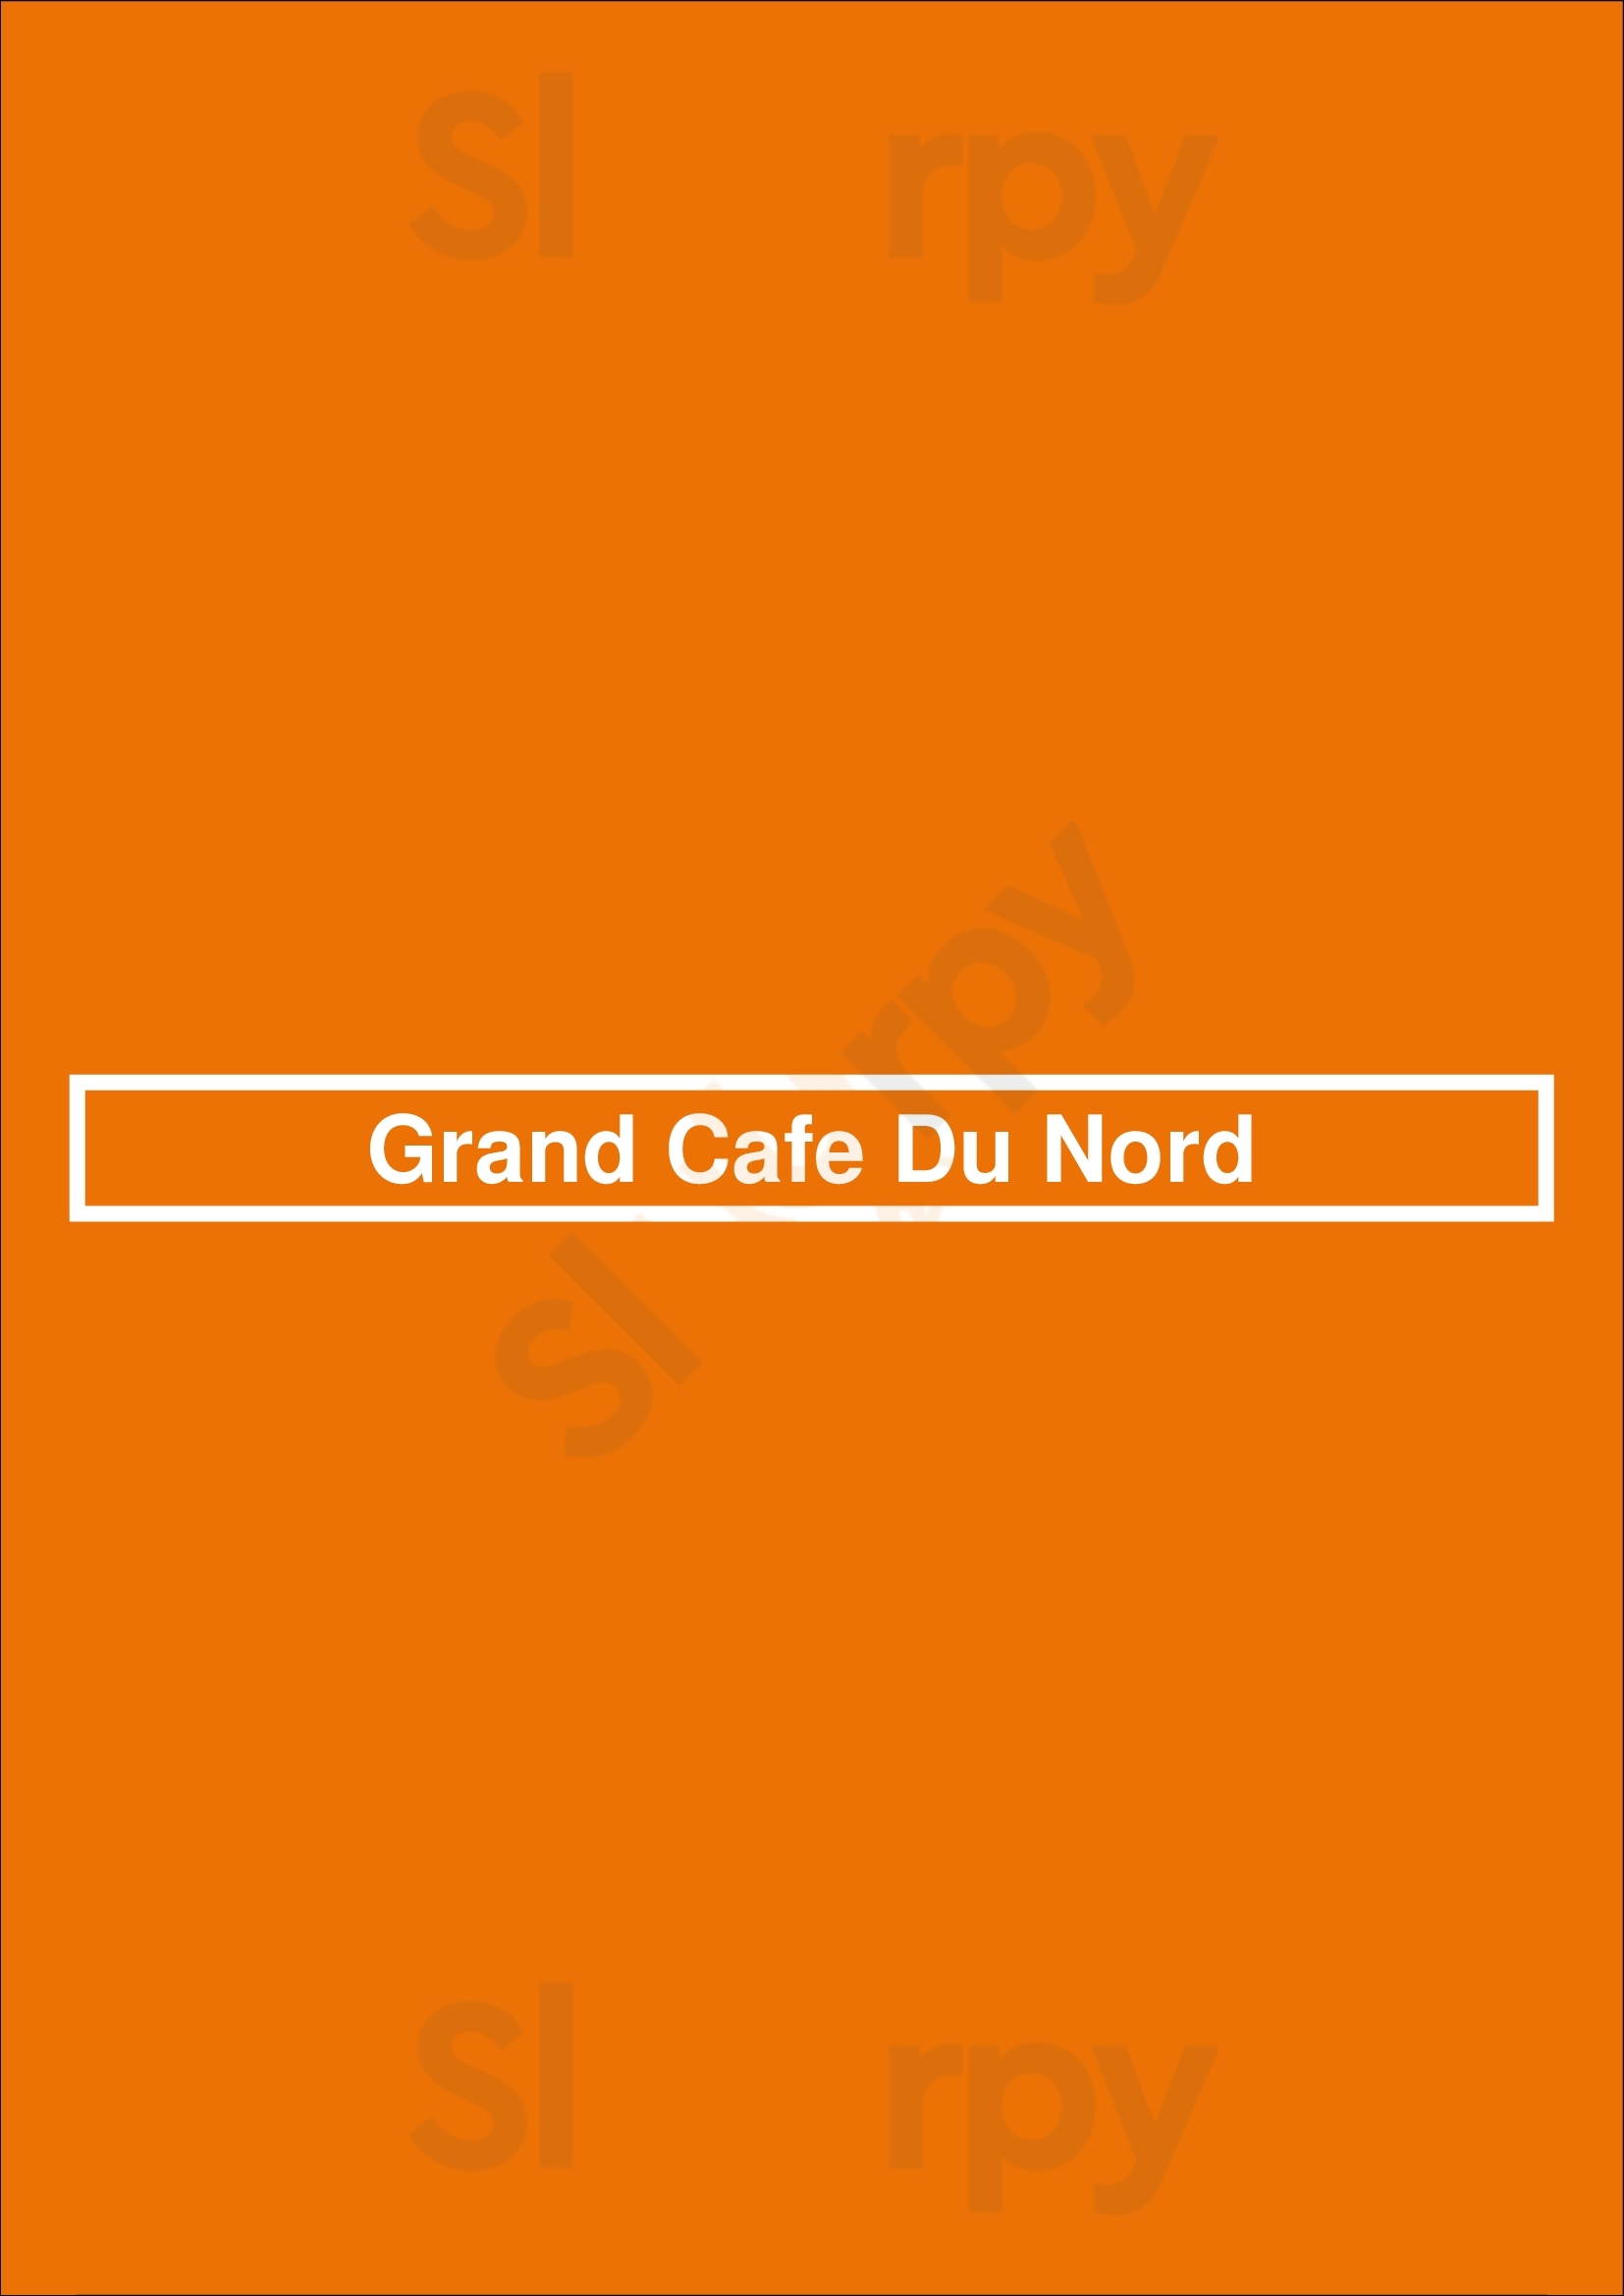 Grand Cafe Du Nord Kaatsheuvel Menu - 1